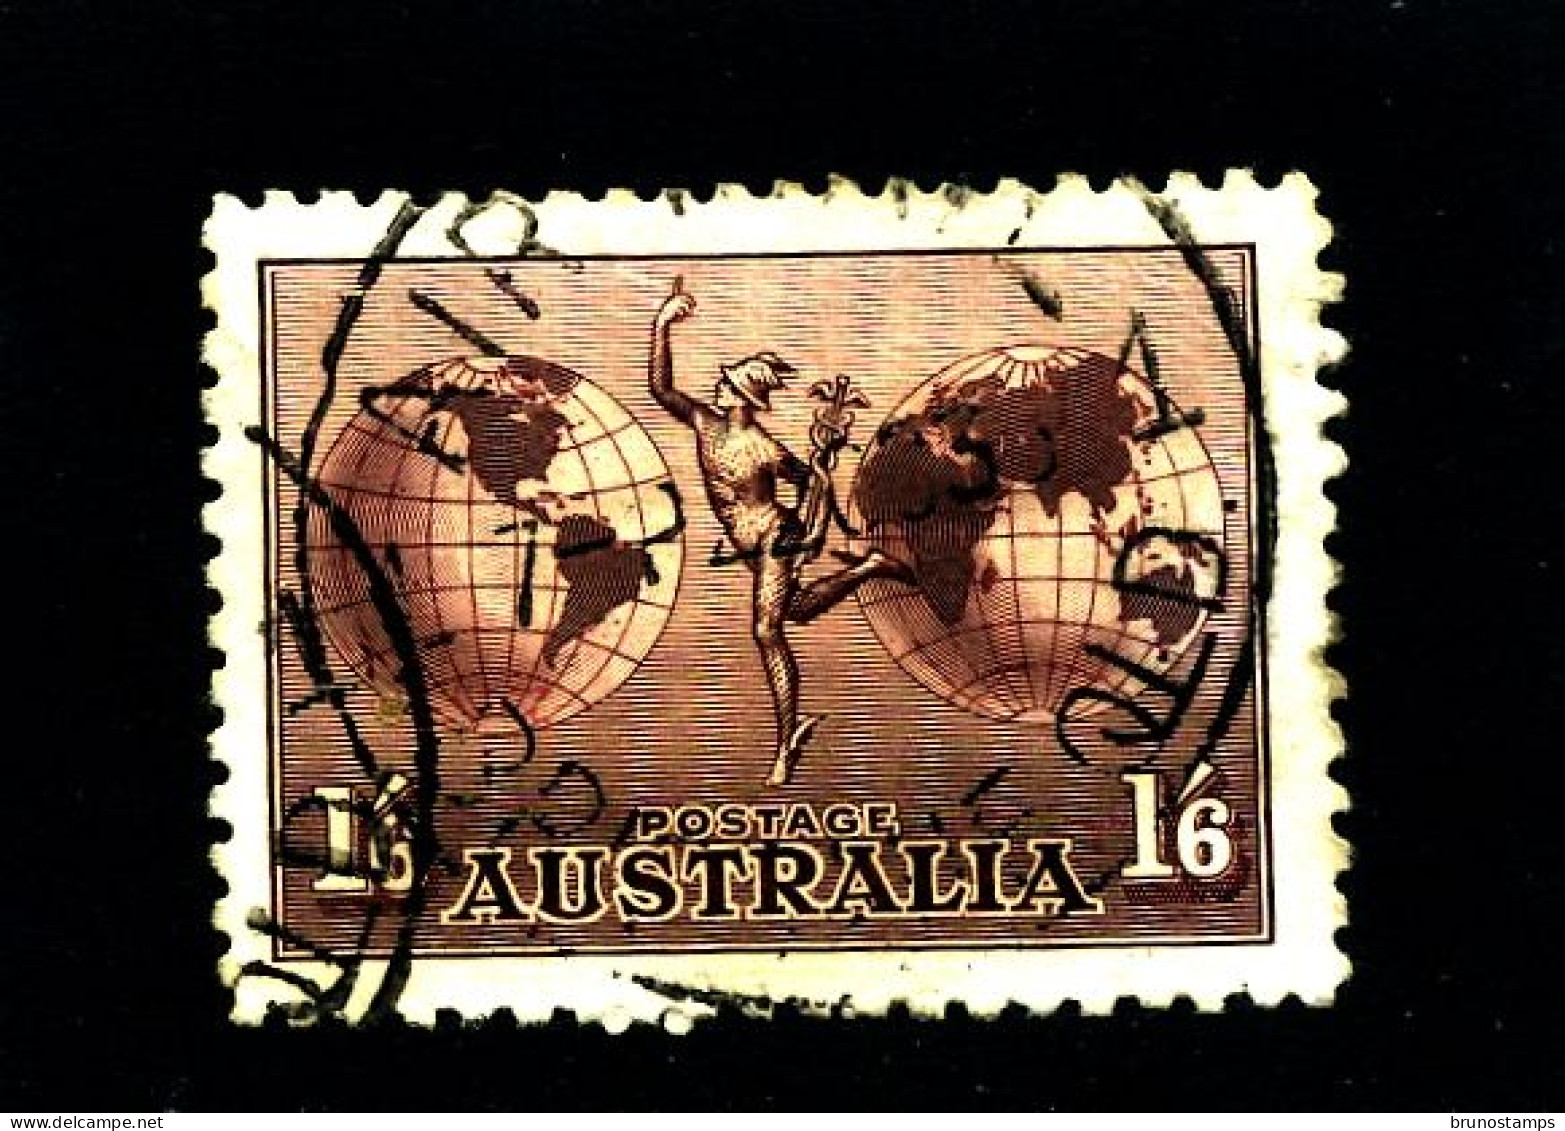 AUSTRALIA - 1934  1/6  HERMES  NO WMK  FINE USED  NH SG 153 - Gebruikt